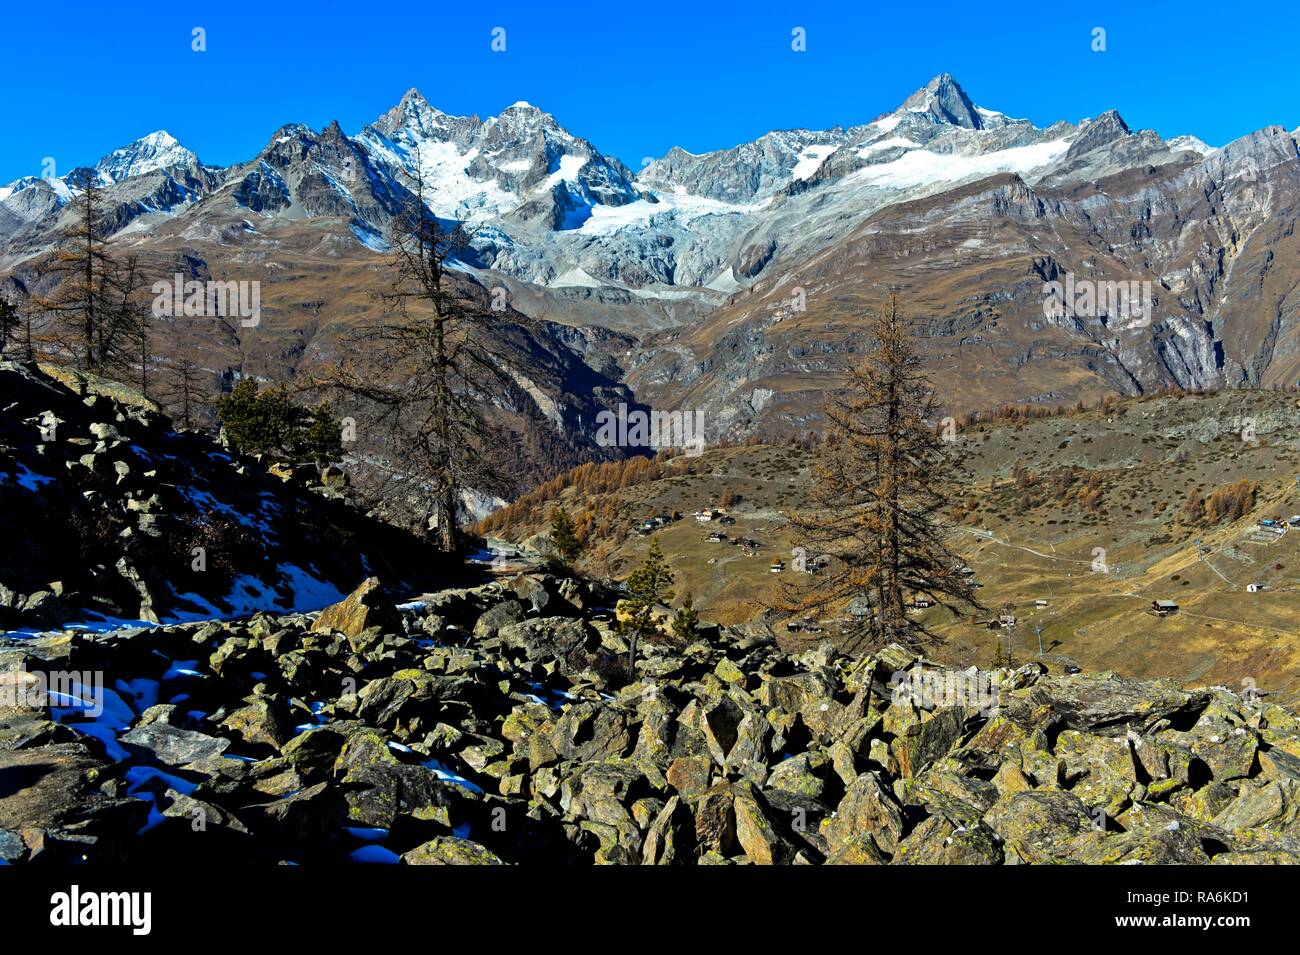 Area escursionistica Zermattt, torna da sinistra a destra Dent Blanche, Ober Gabelhorn, Gabelhorn ghiacciaio, Wellenkuppe, Trift Glacier Foto Stock